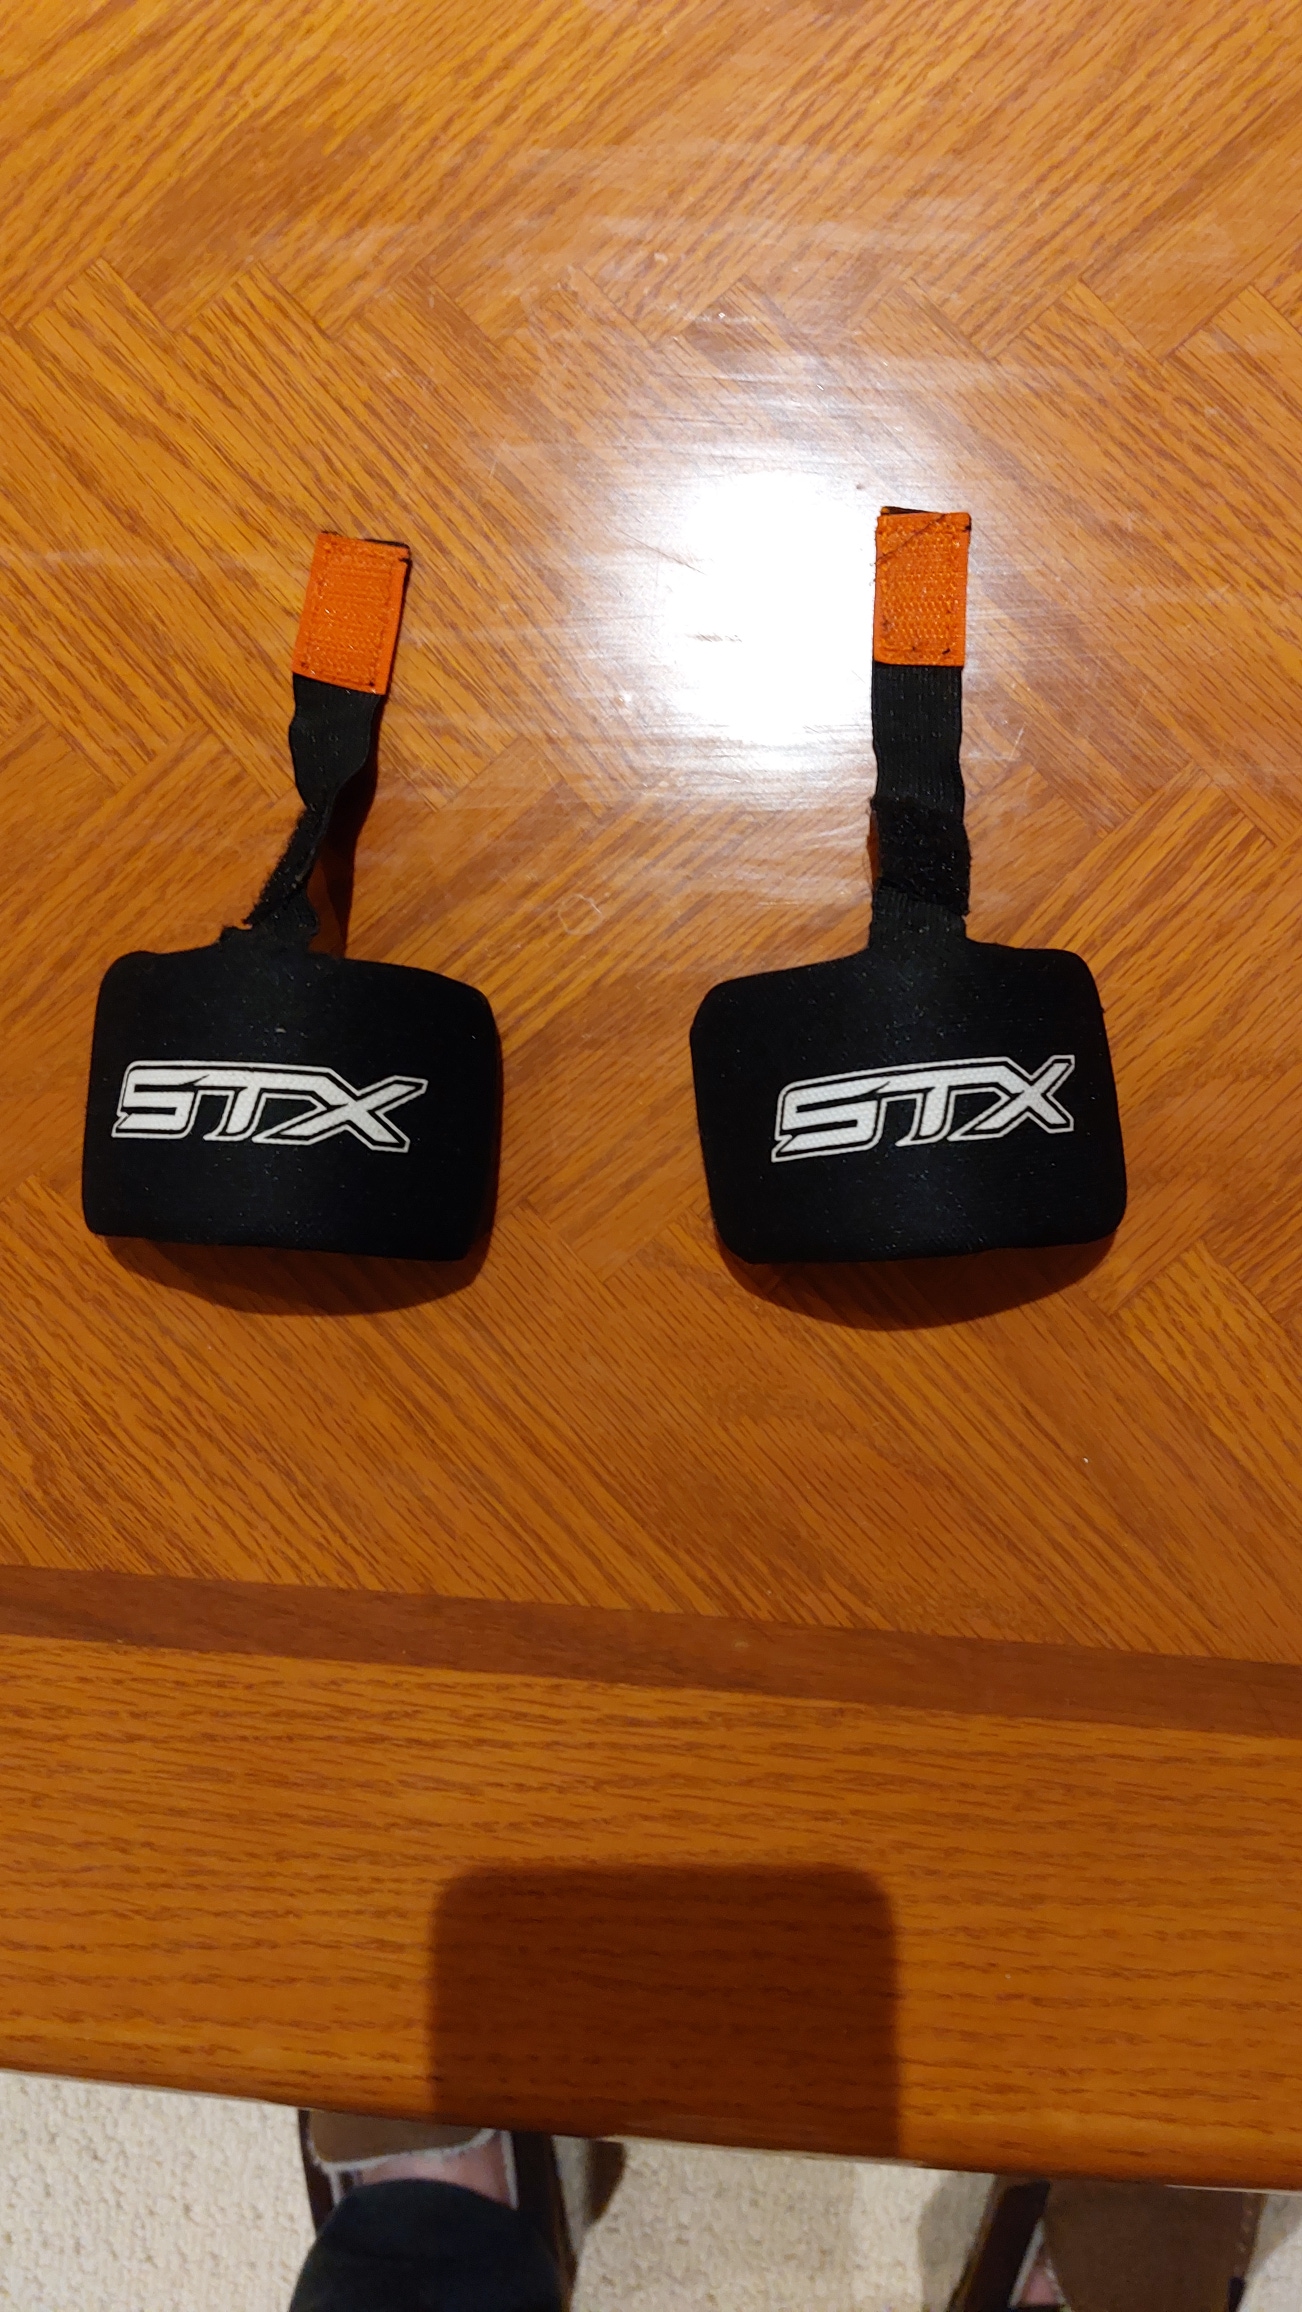 Used STX wrist guards - small